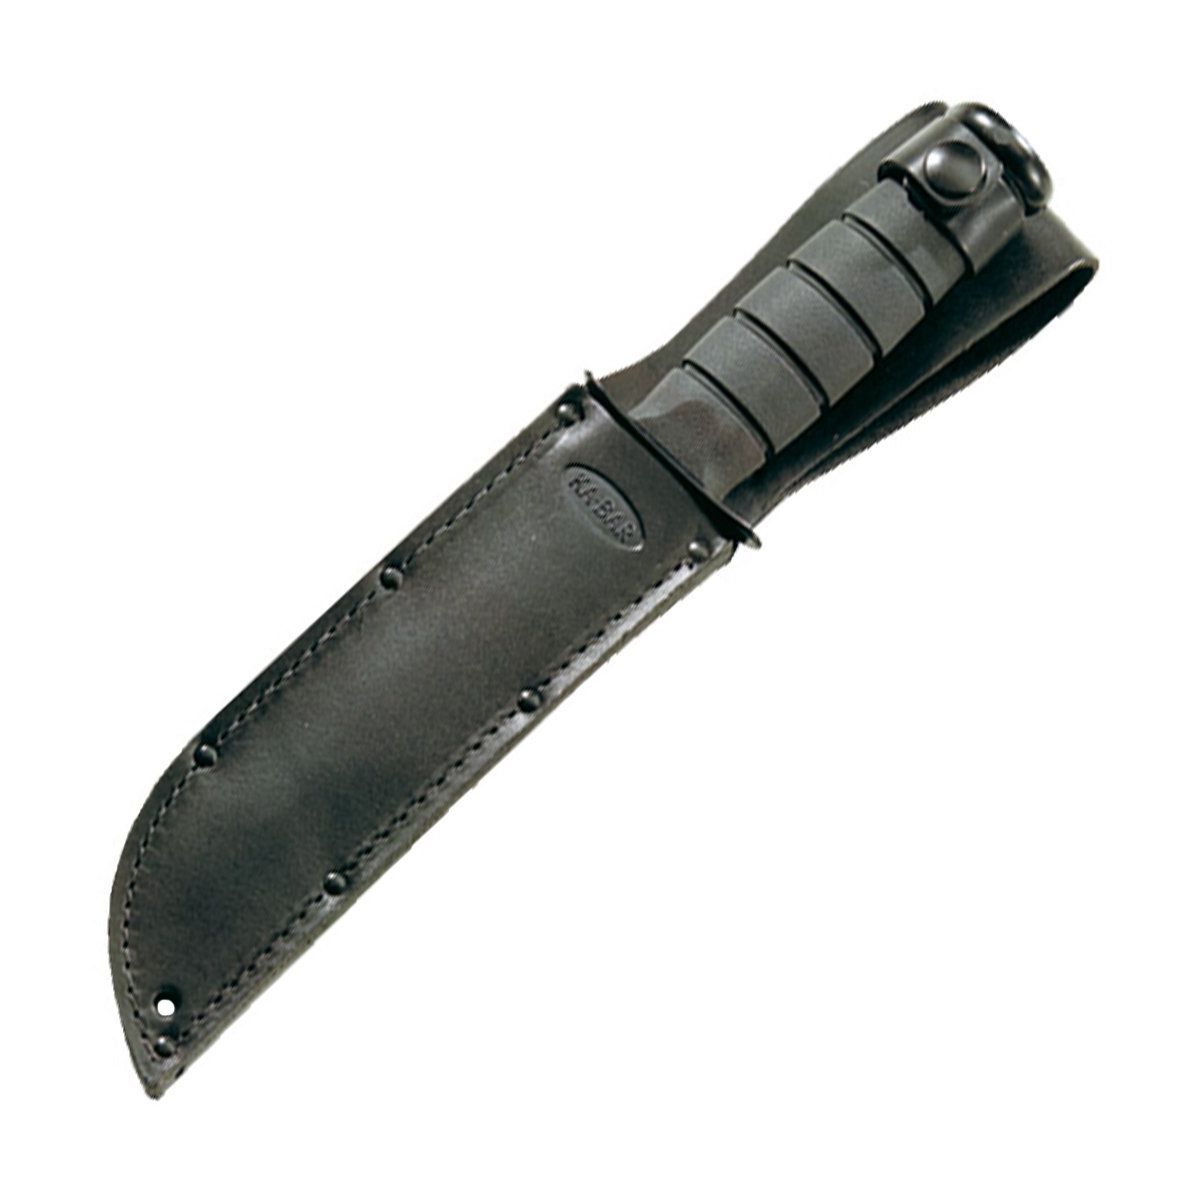 Knife FIGHTING / UTILITY serrated Tanto blade BLACK KA-BAR 02-1255 L-11